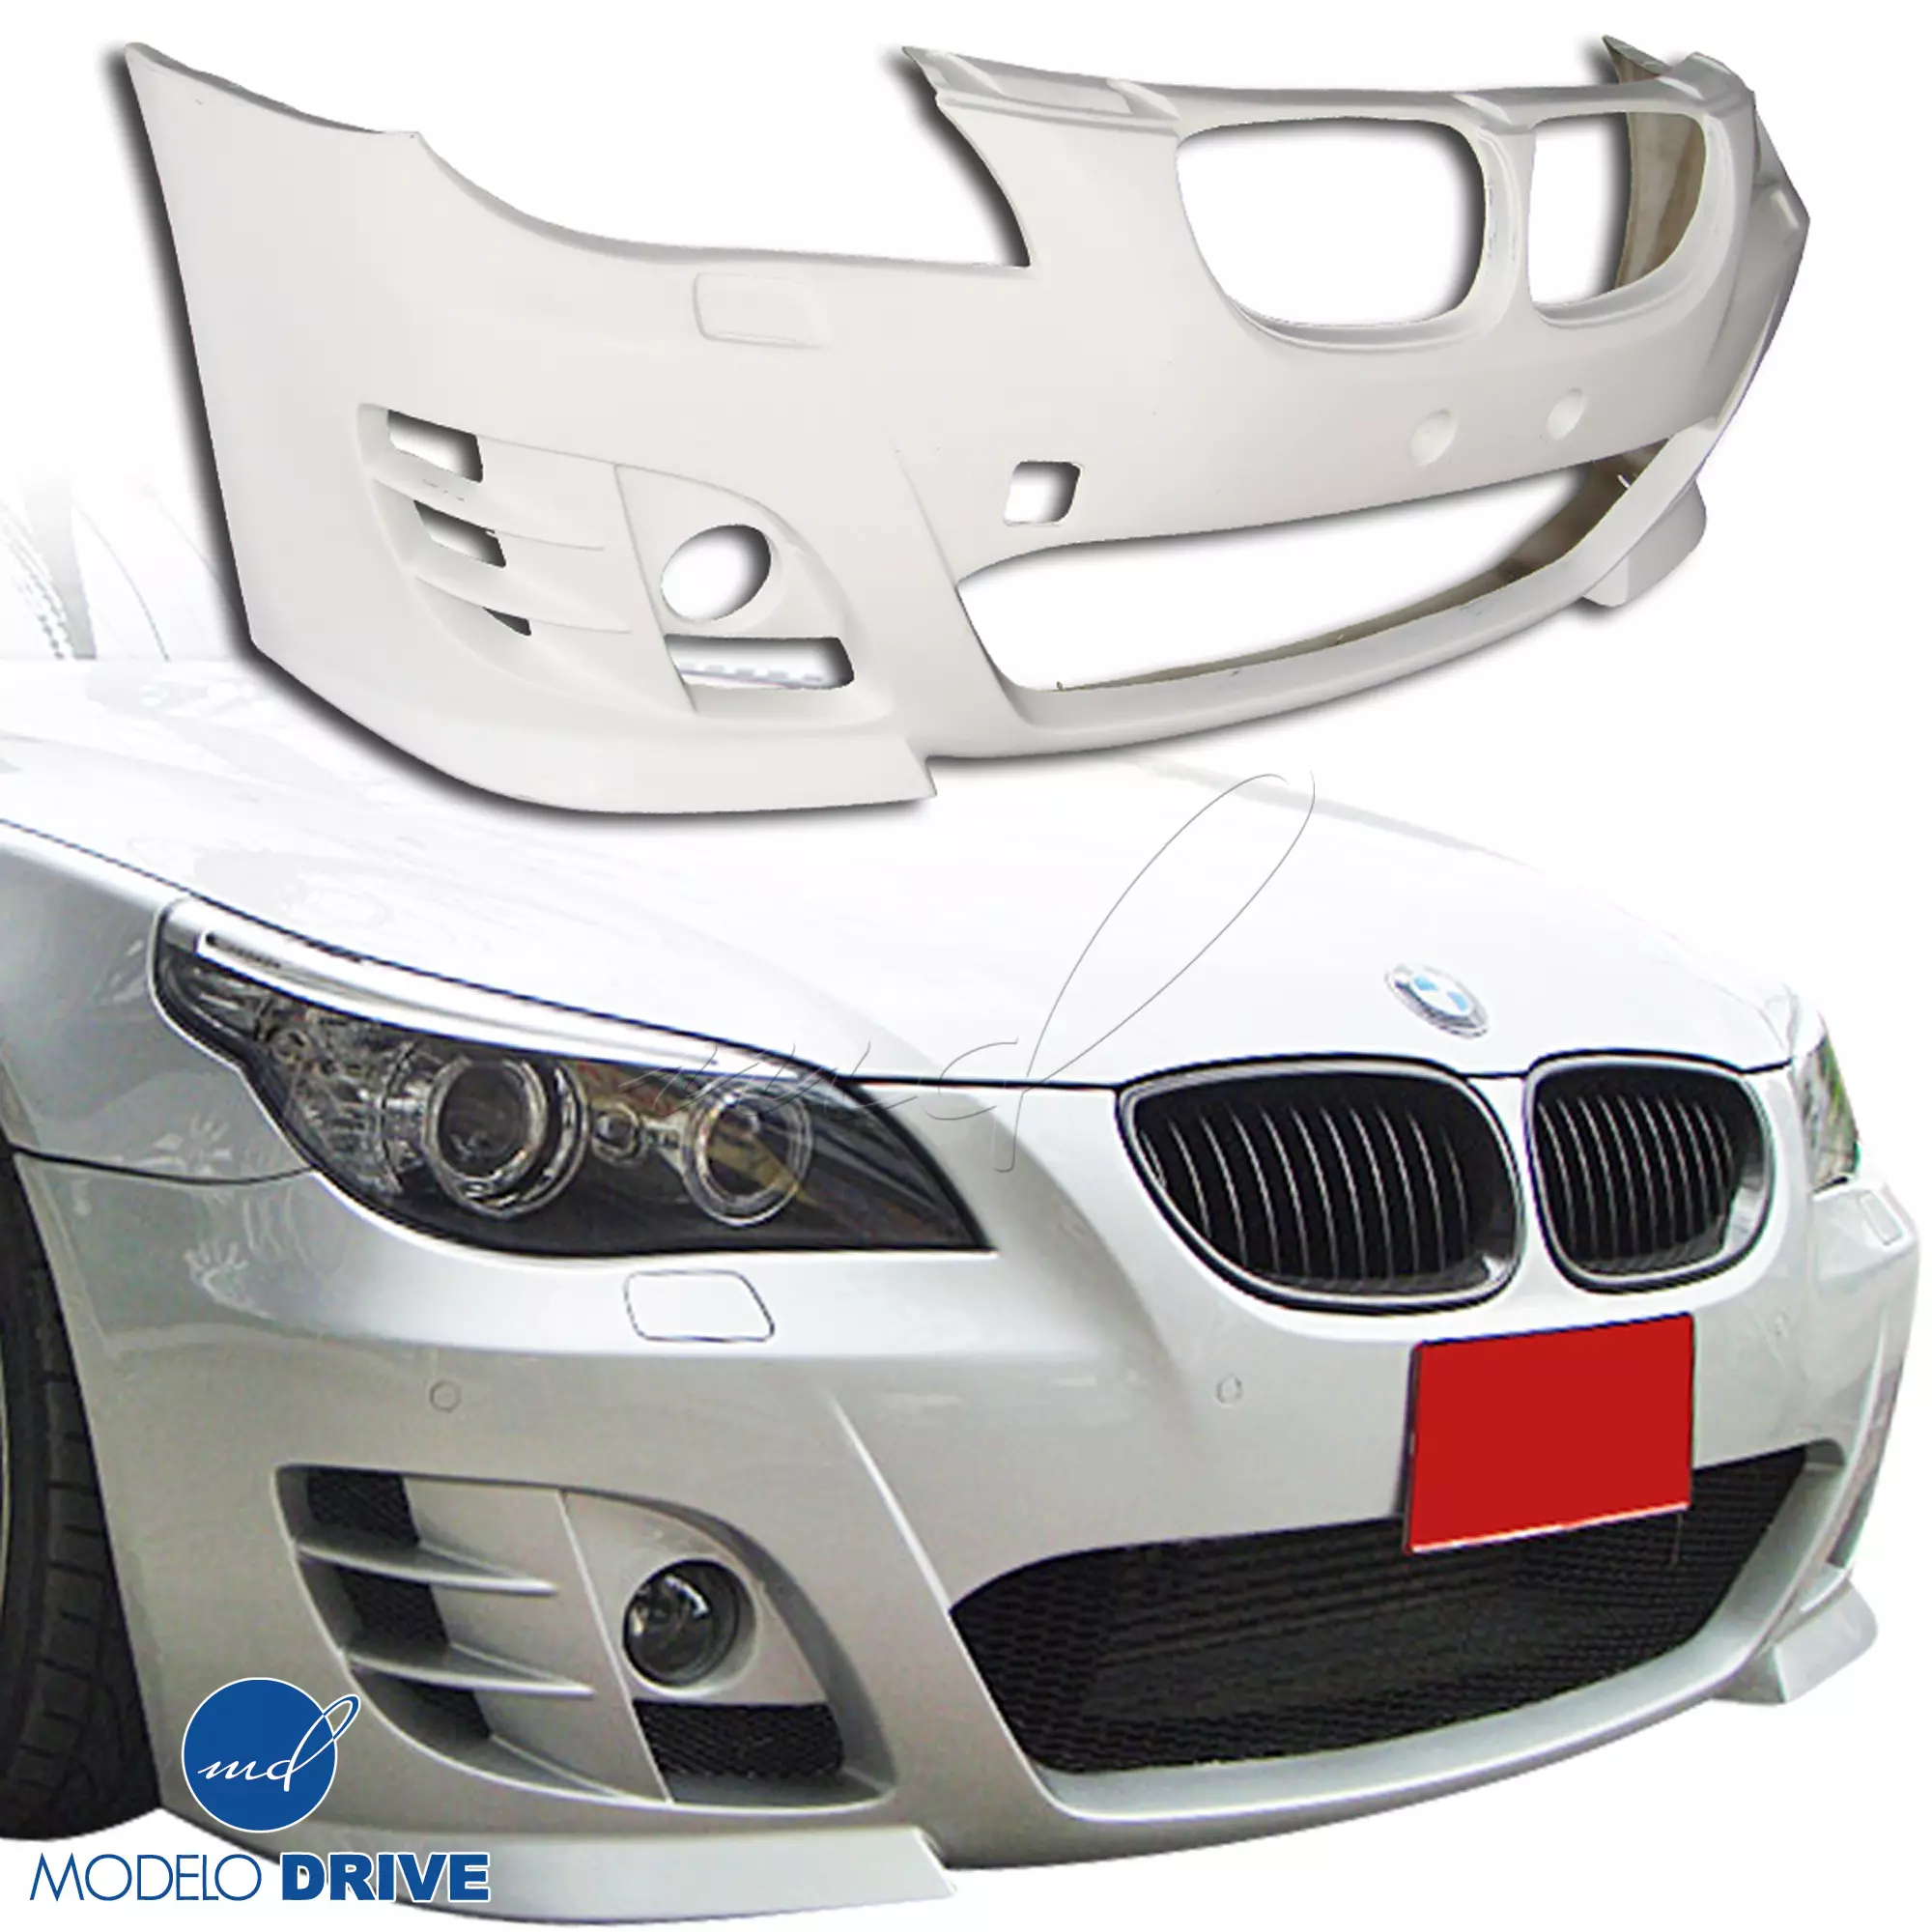 ModeloDrive FRP KERS Body Kit 4pc > BMW 3-Series E60 2004-2010 > 4dr - Image 1